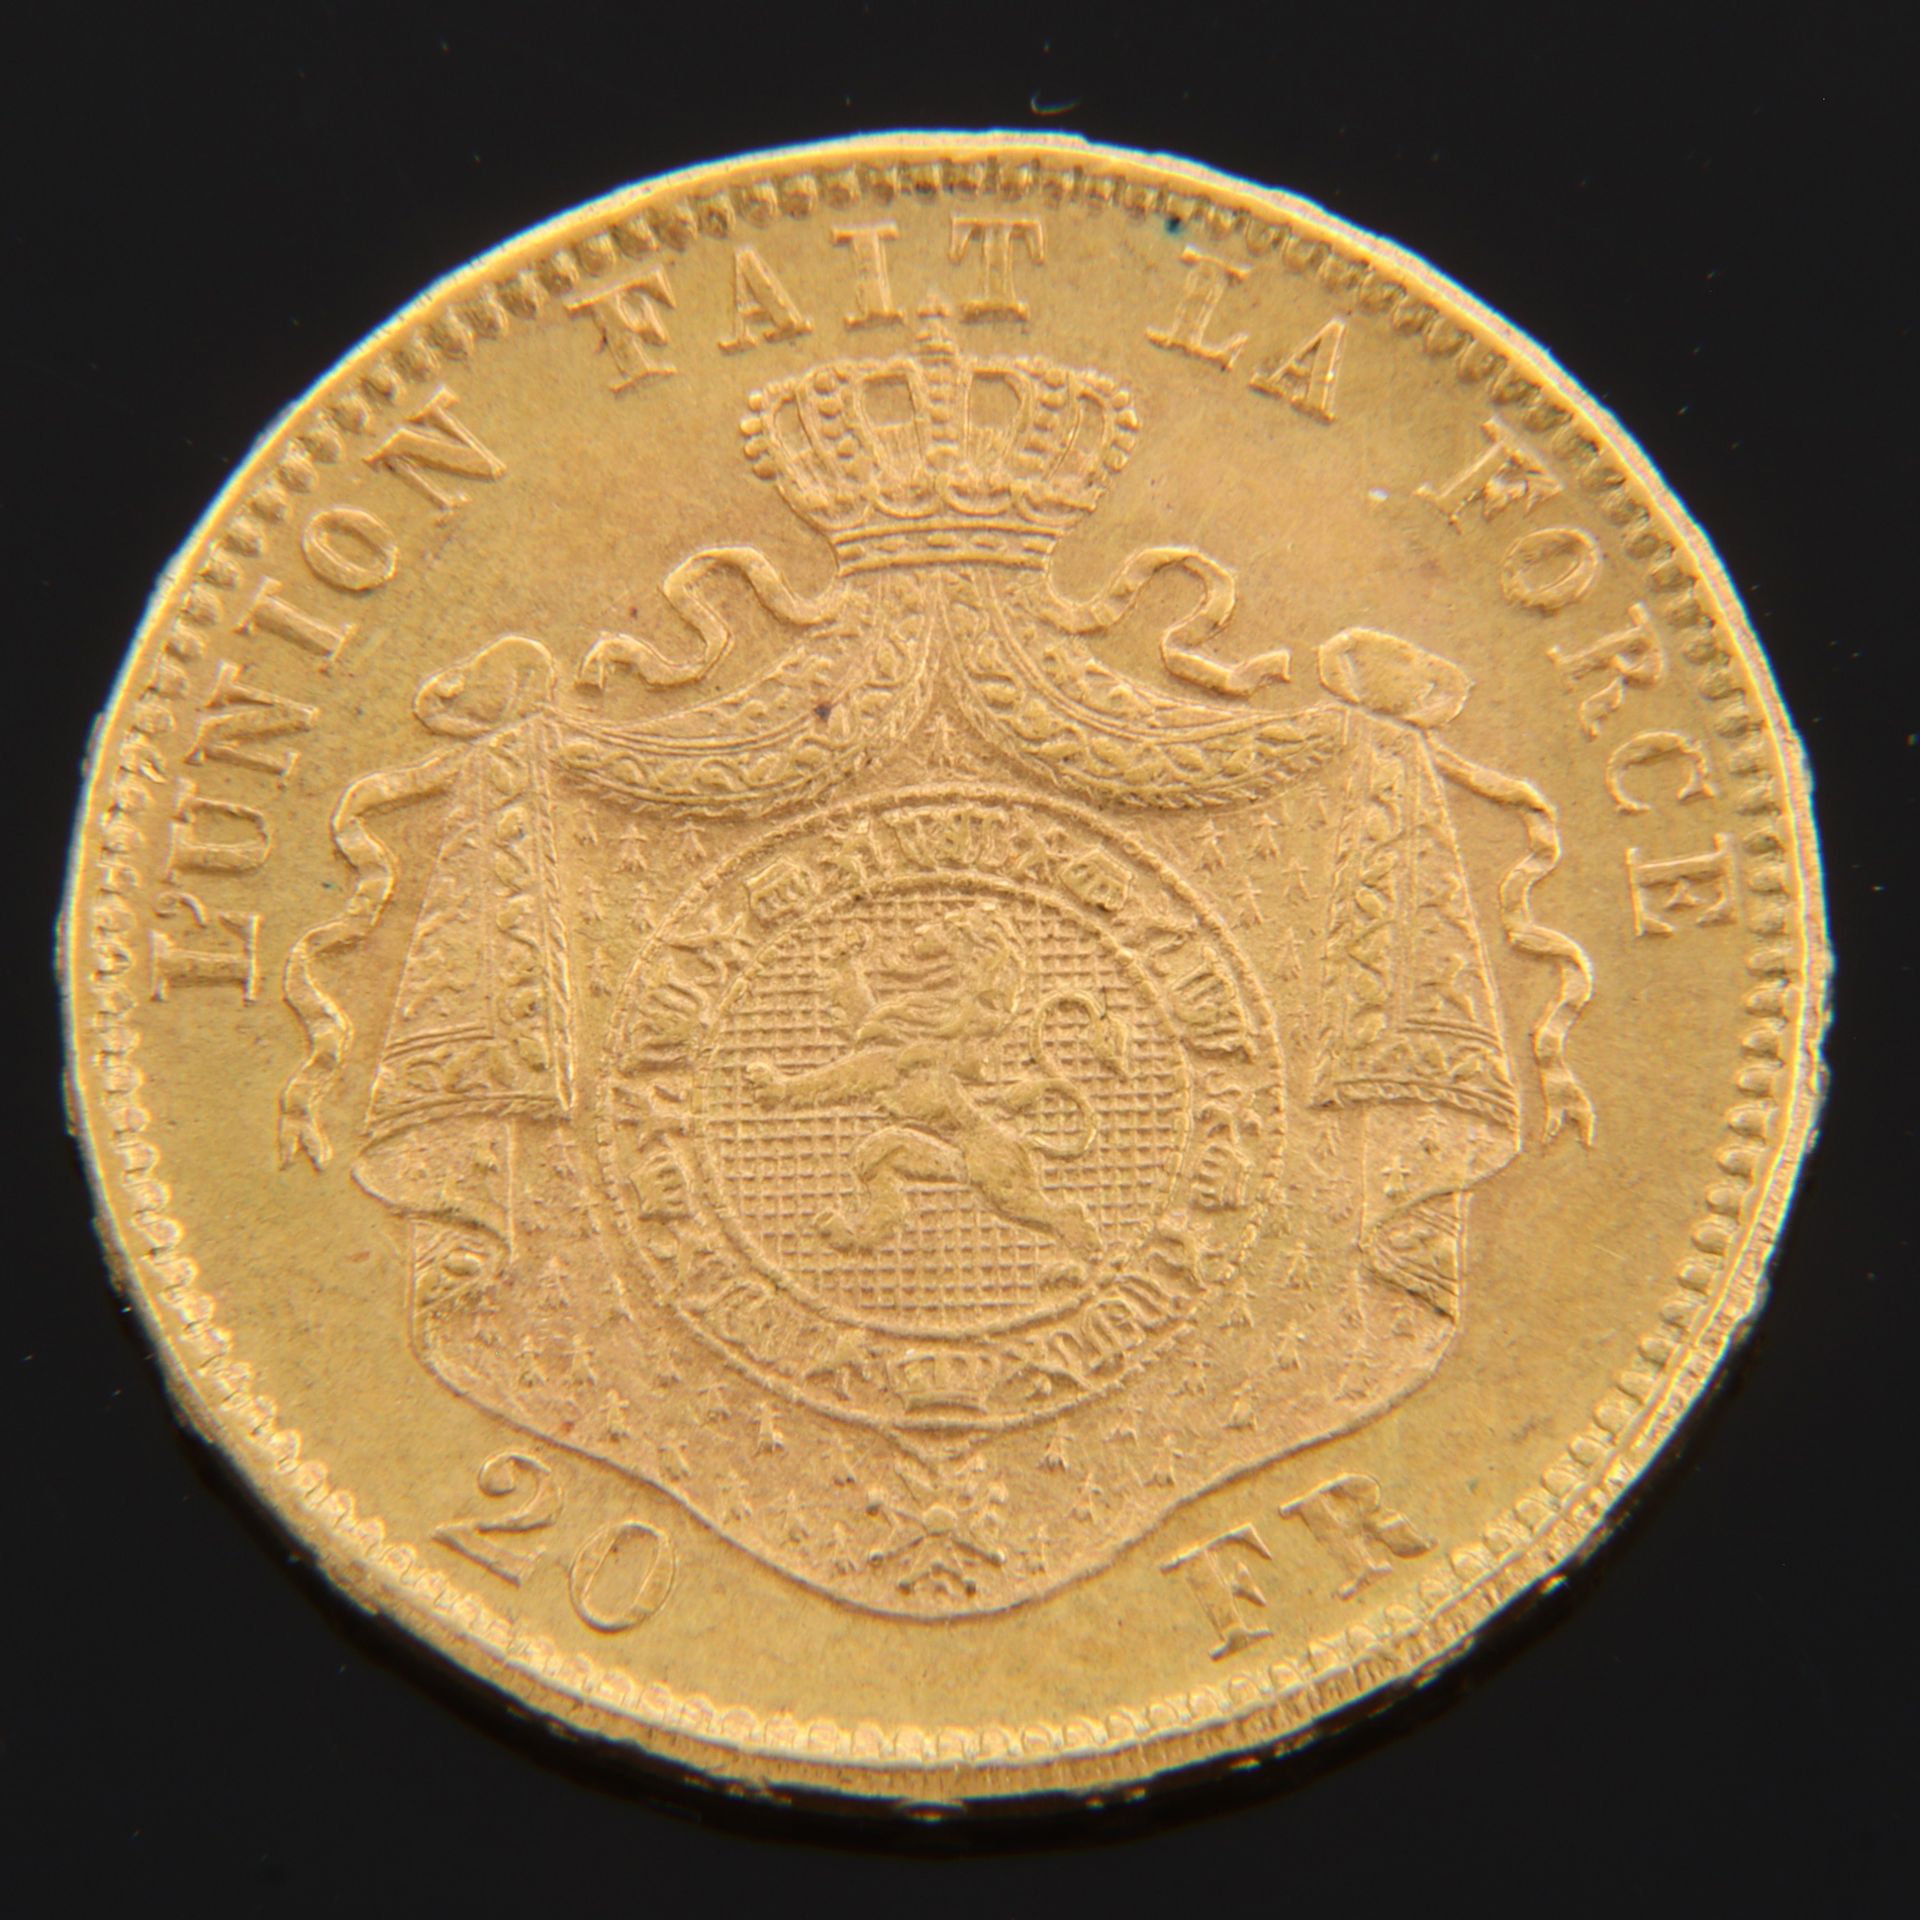 Goldmünze - 20 Francs - Image 2 of 2